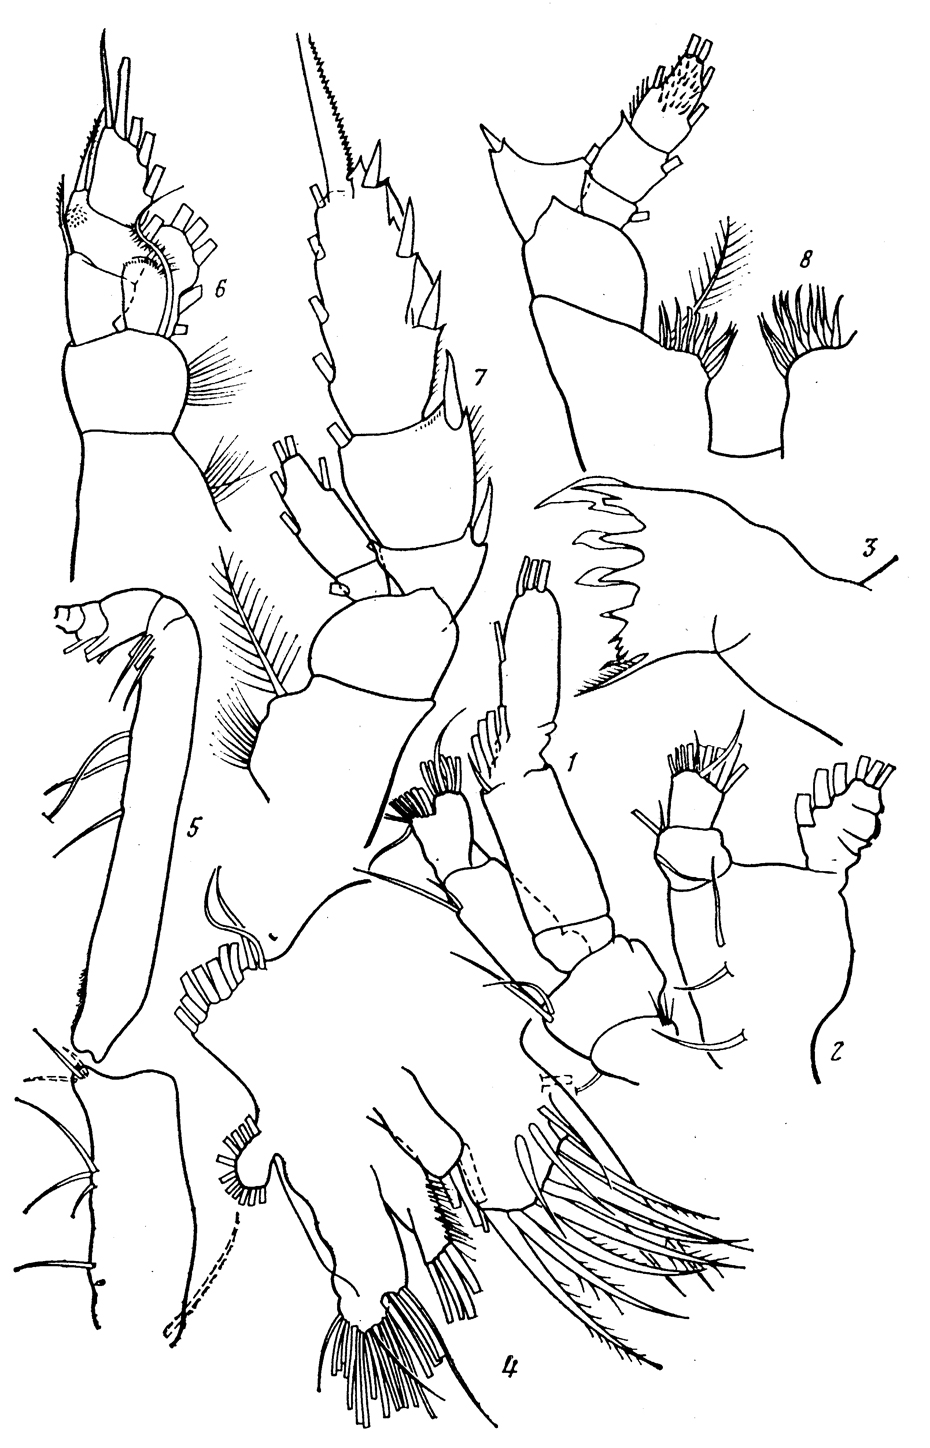 Espce Pseudochirella bowmani - Planche 3 de figures morphologiques